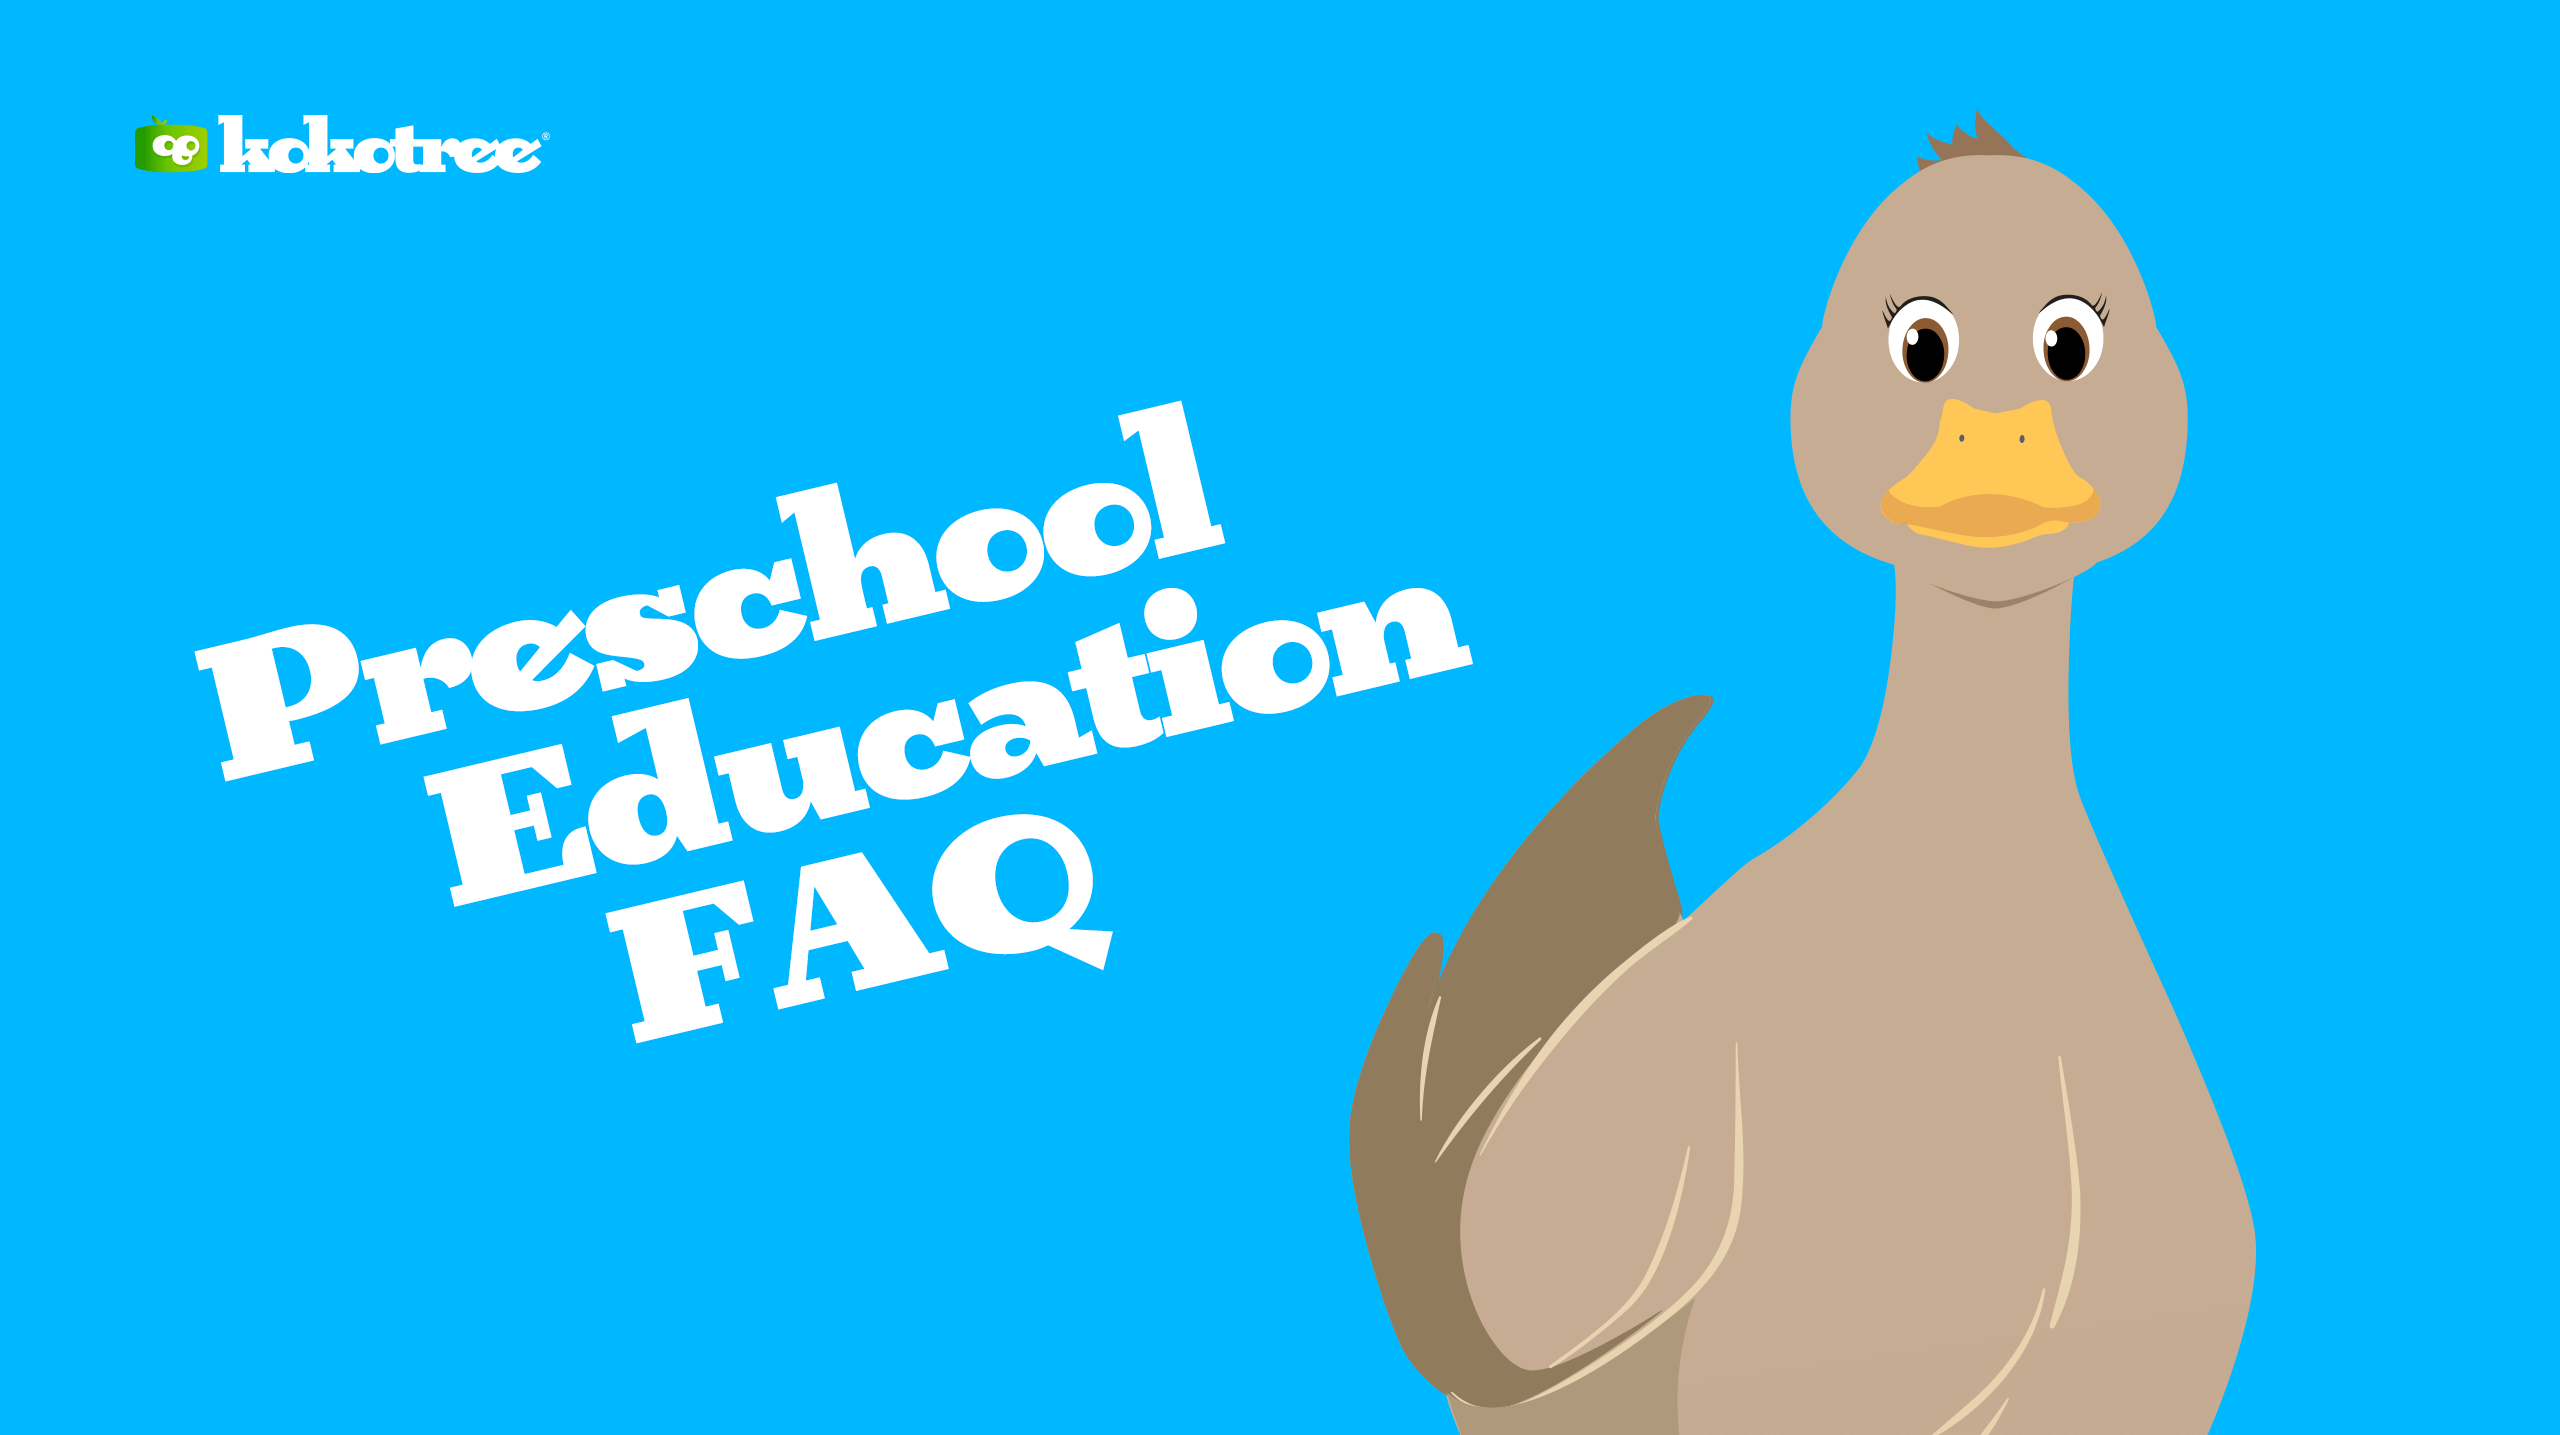 preschool-education-what-every-parent-should-know-faq-kokotree